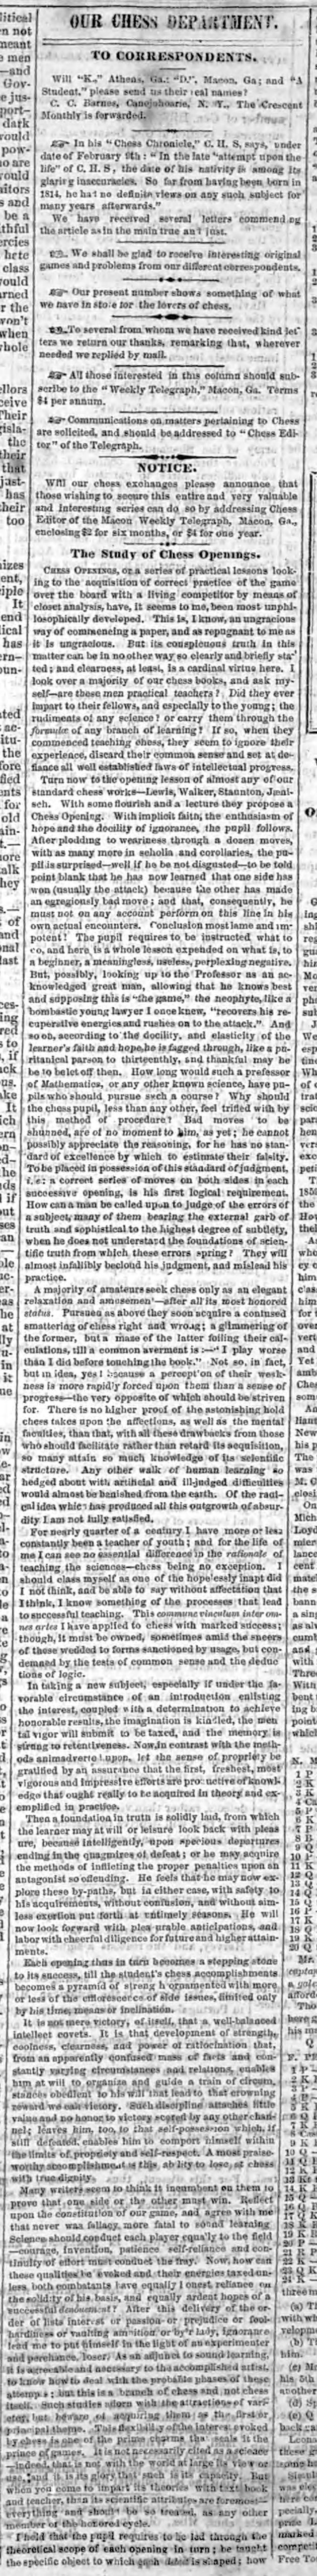 1867.02.15-01 Macon Georgia Weekly Telegraph.jpg